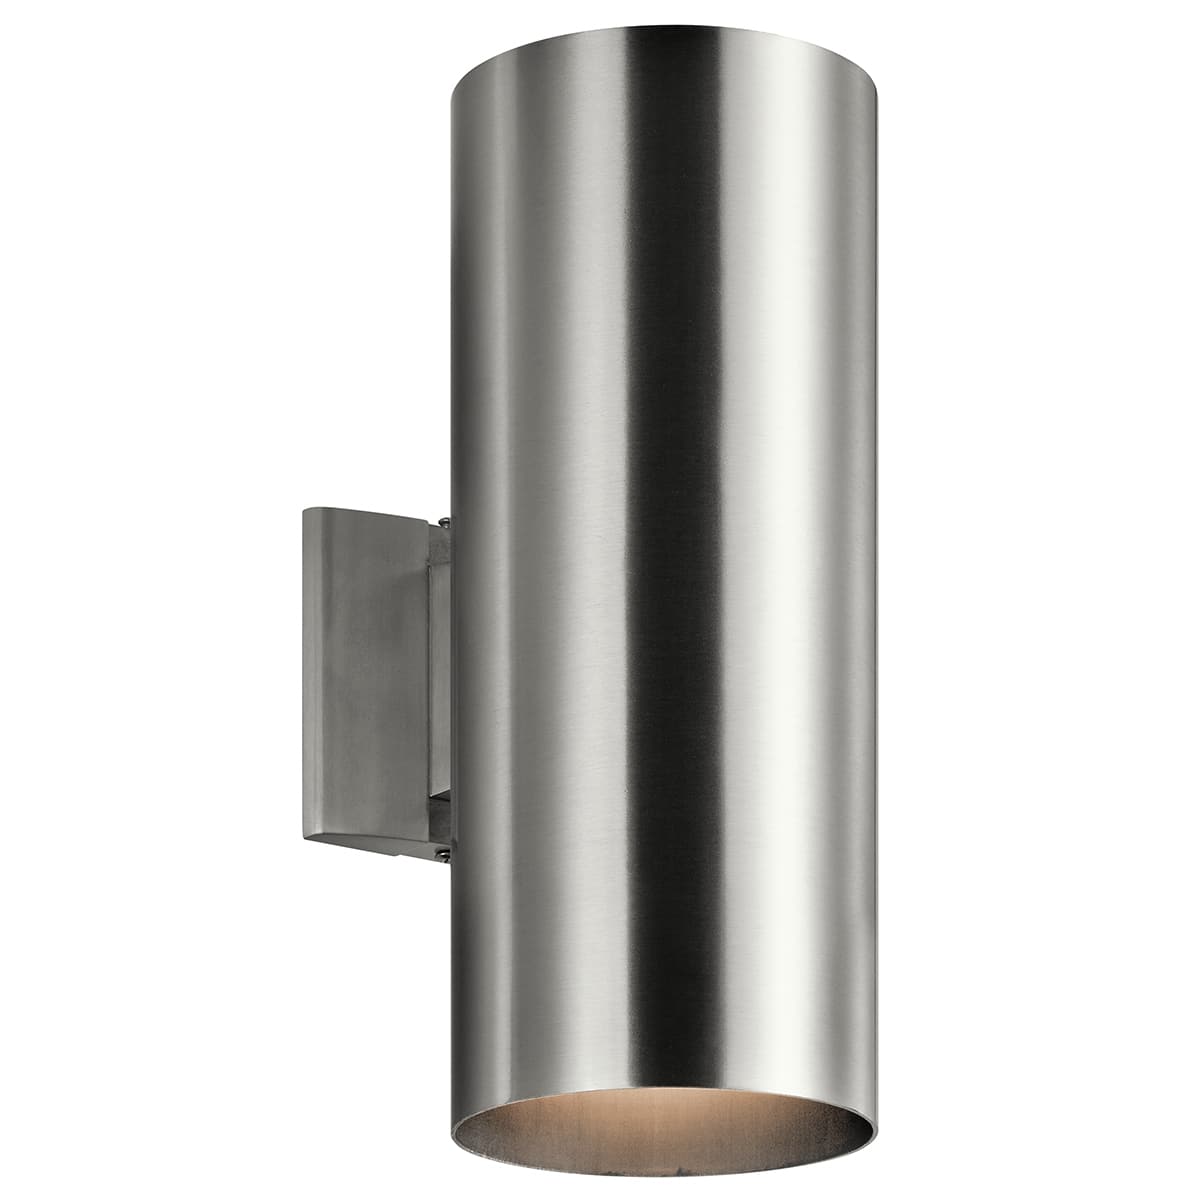 Kichler 9246AZ Signature 2-Light Wall Lantern in Architectural Aluminum Bronze 